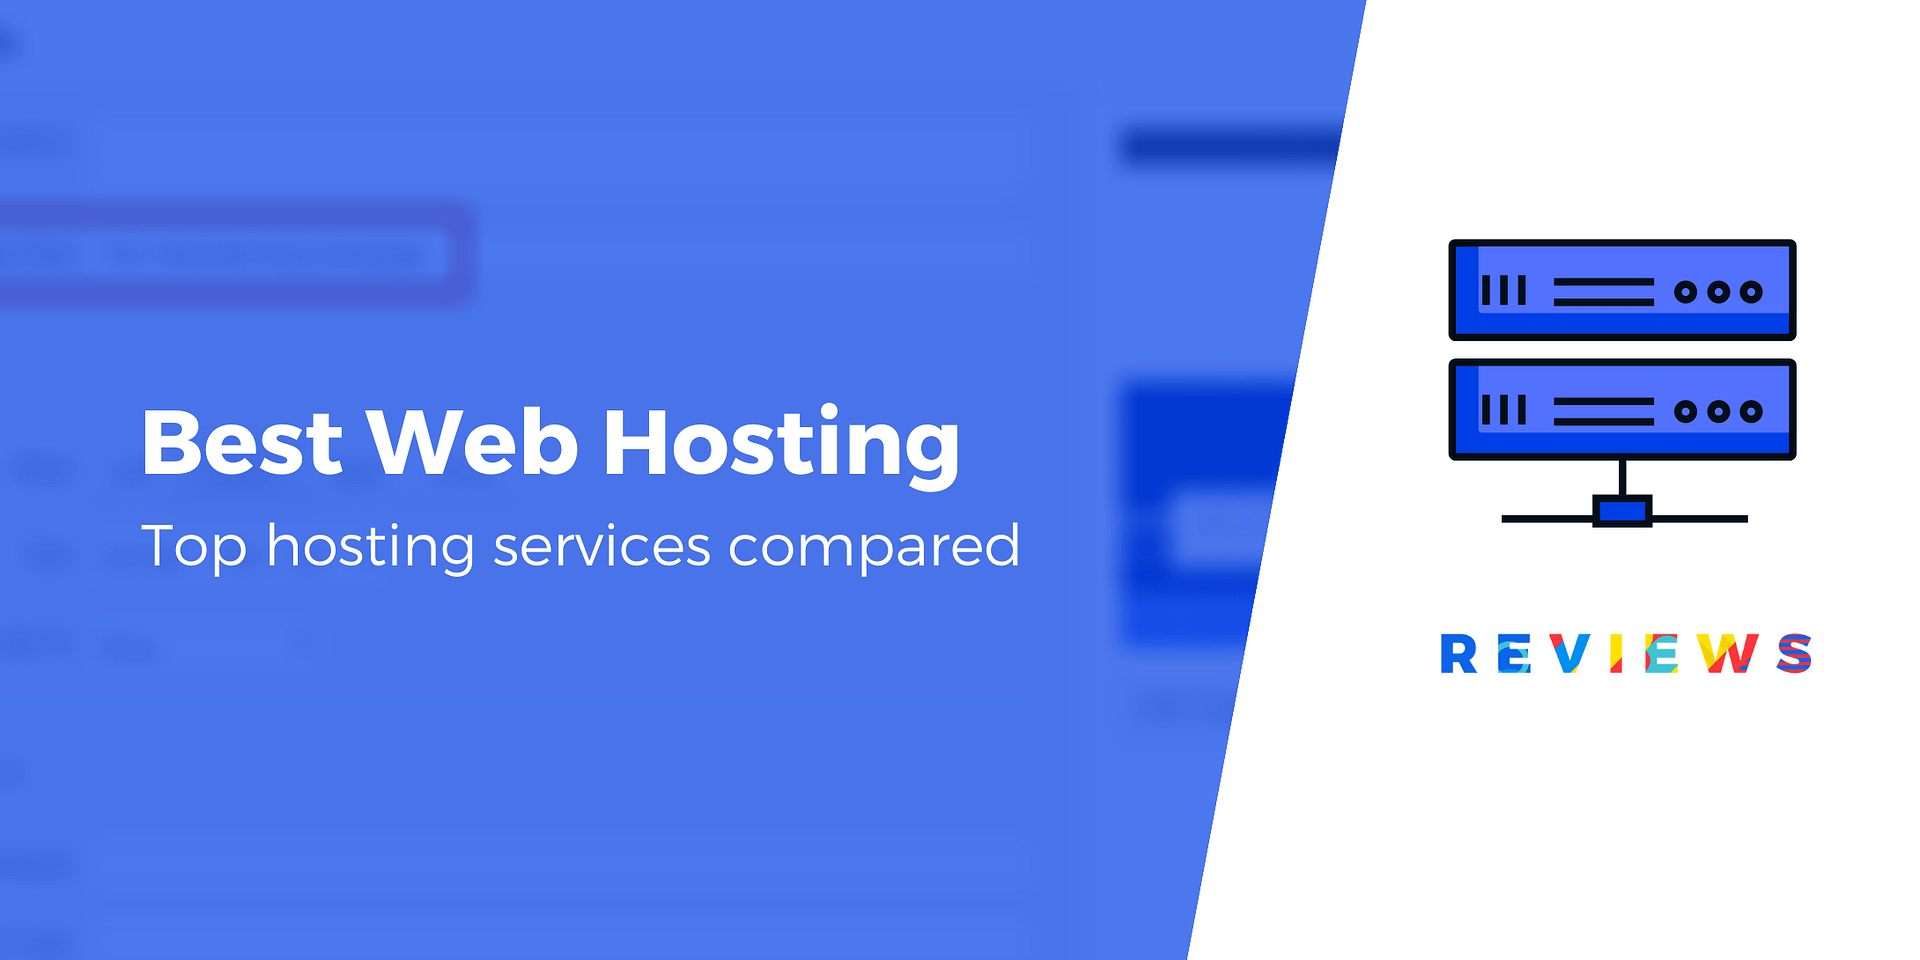 free domain hosting reviews